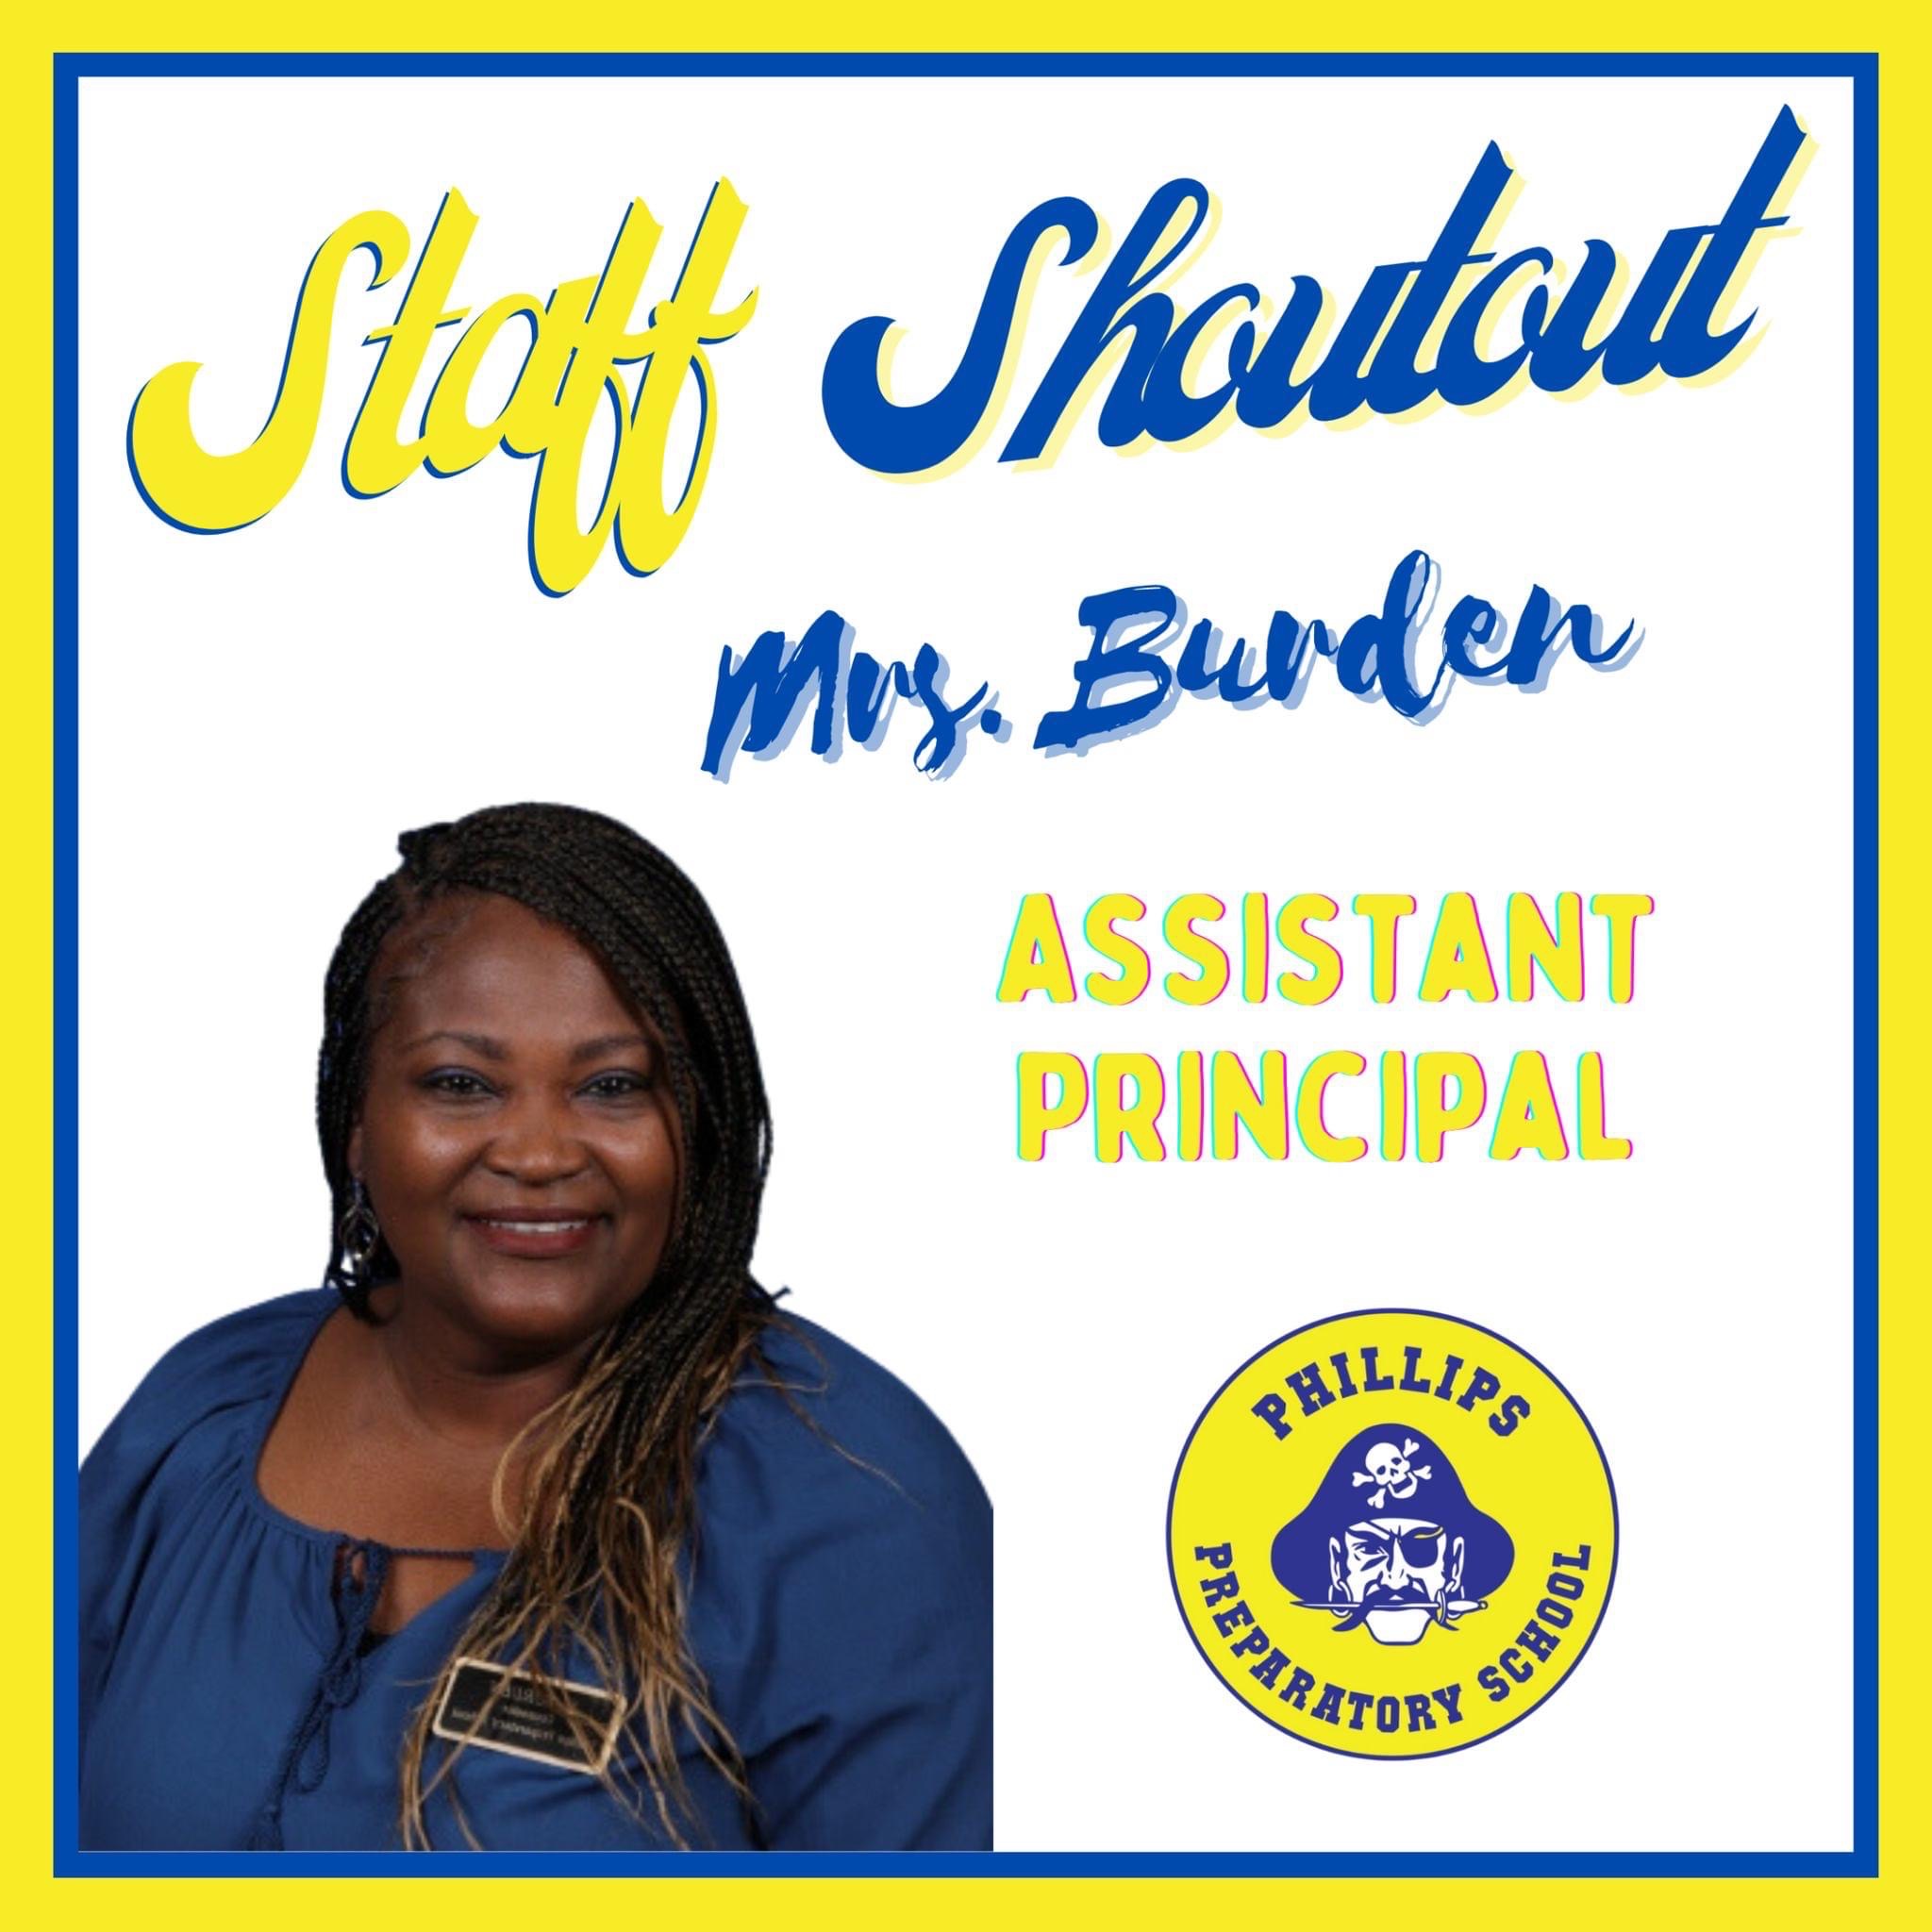 Mrs. Burden